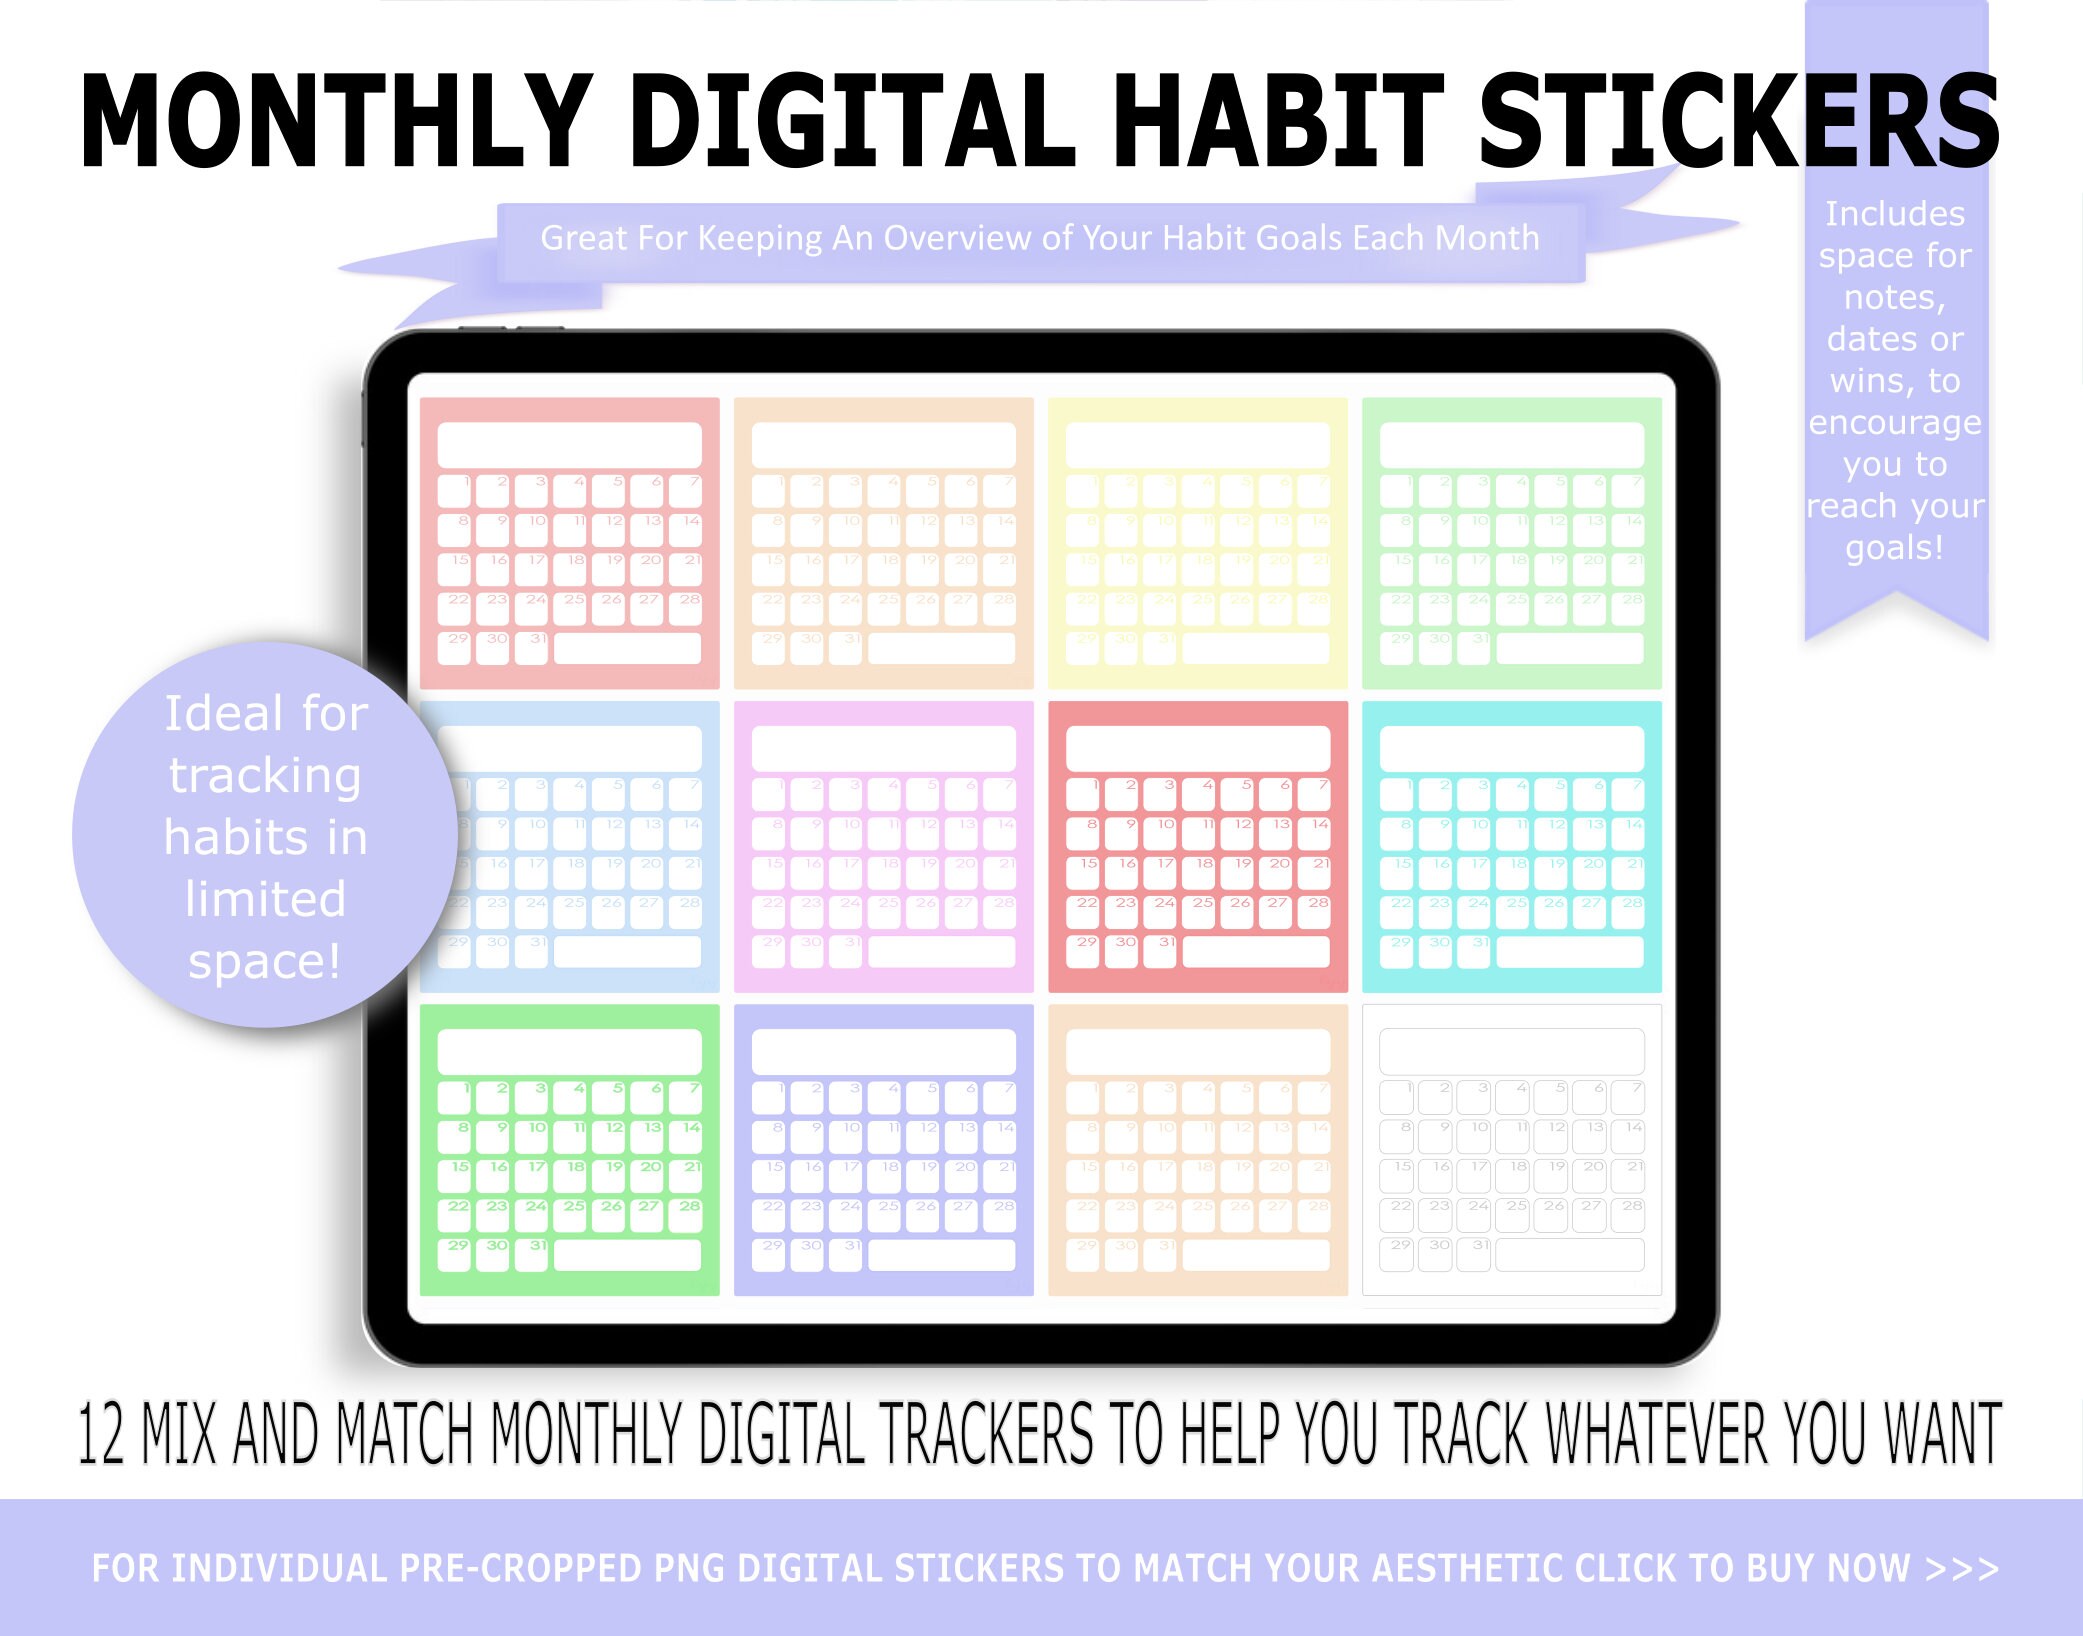 Habit Tracker Digital Planner Stickers, Habit Tracker Stickers, Weekly  Habit Tracker, Goodnotes Digital Stickers, iPad Stickers, Muted 